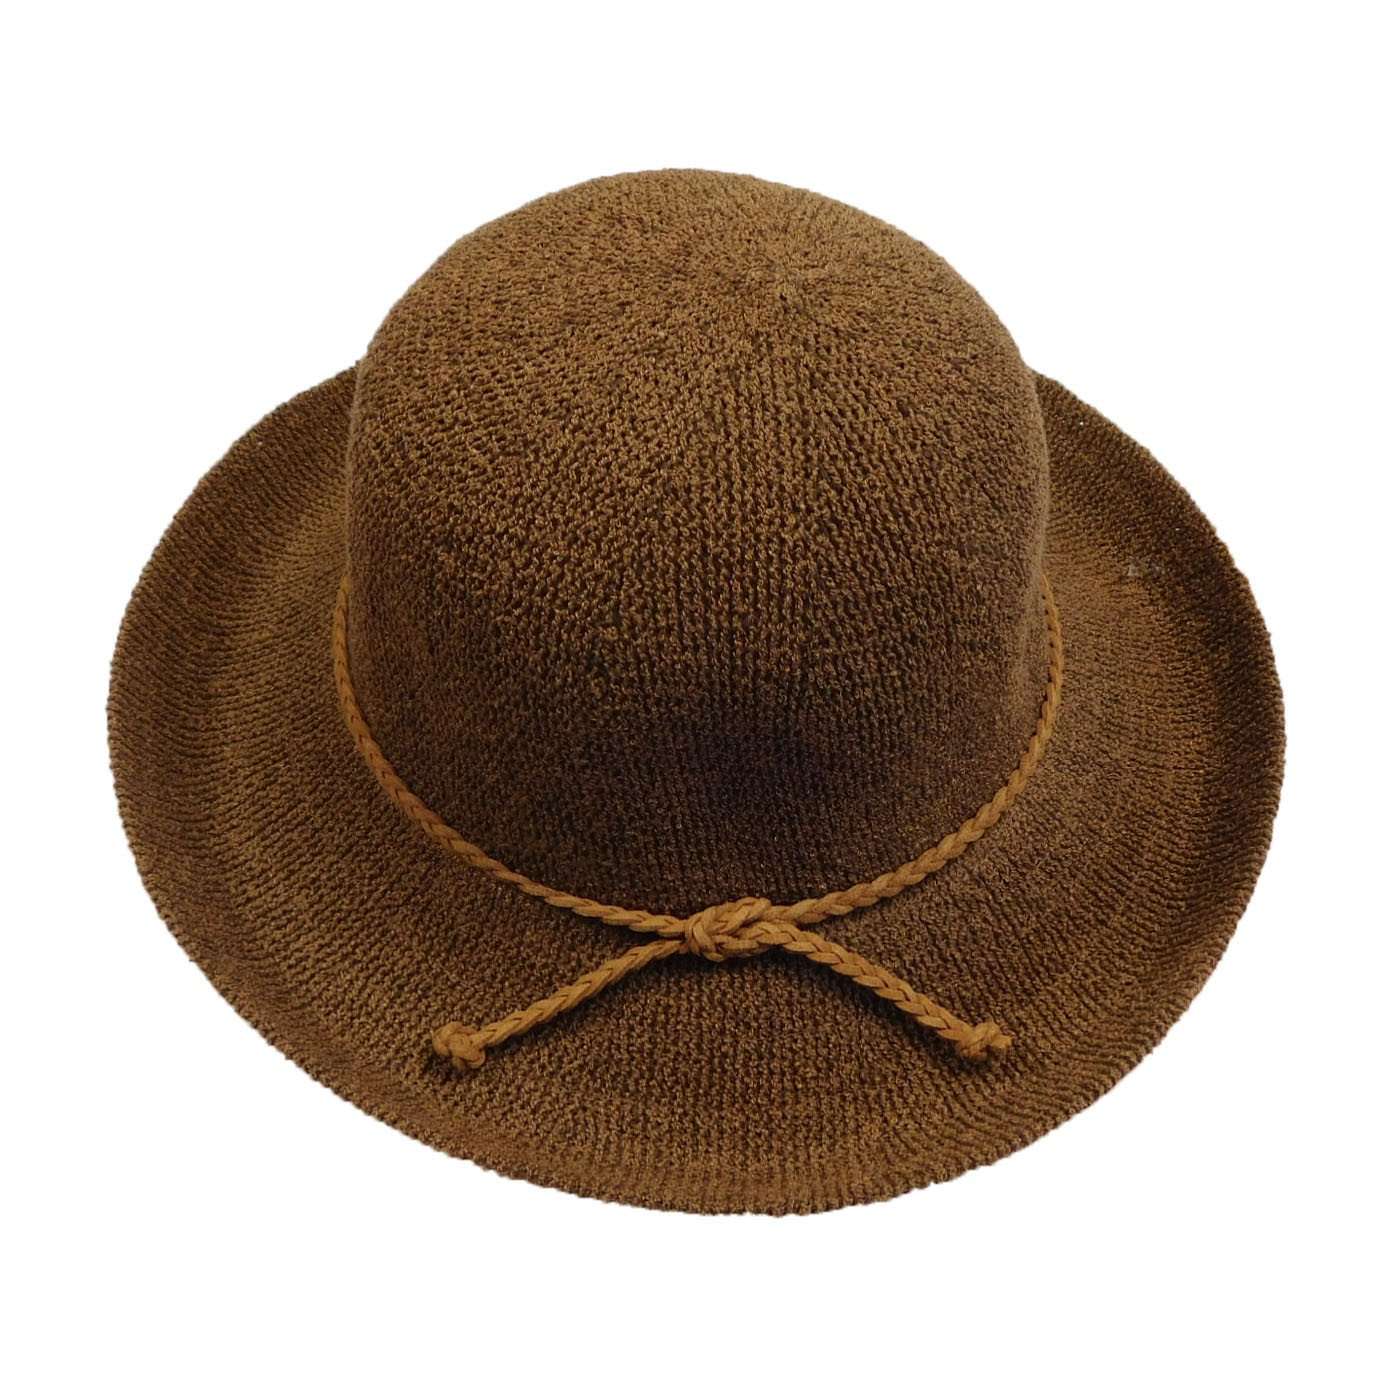 Knit Up Turned Brim Breton Hat, Brown - DNMC Kettle Brim Hat Boardwalk Style Hats    